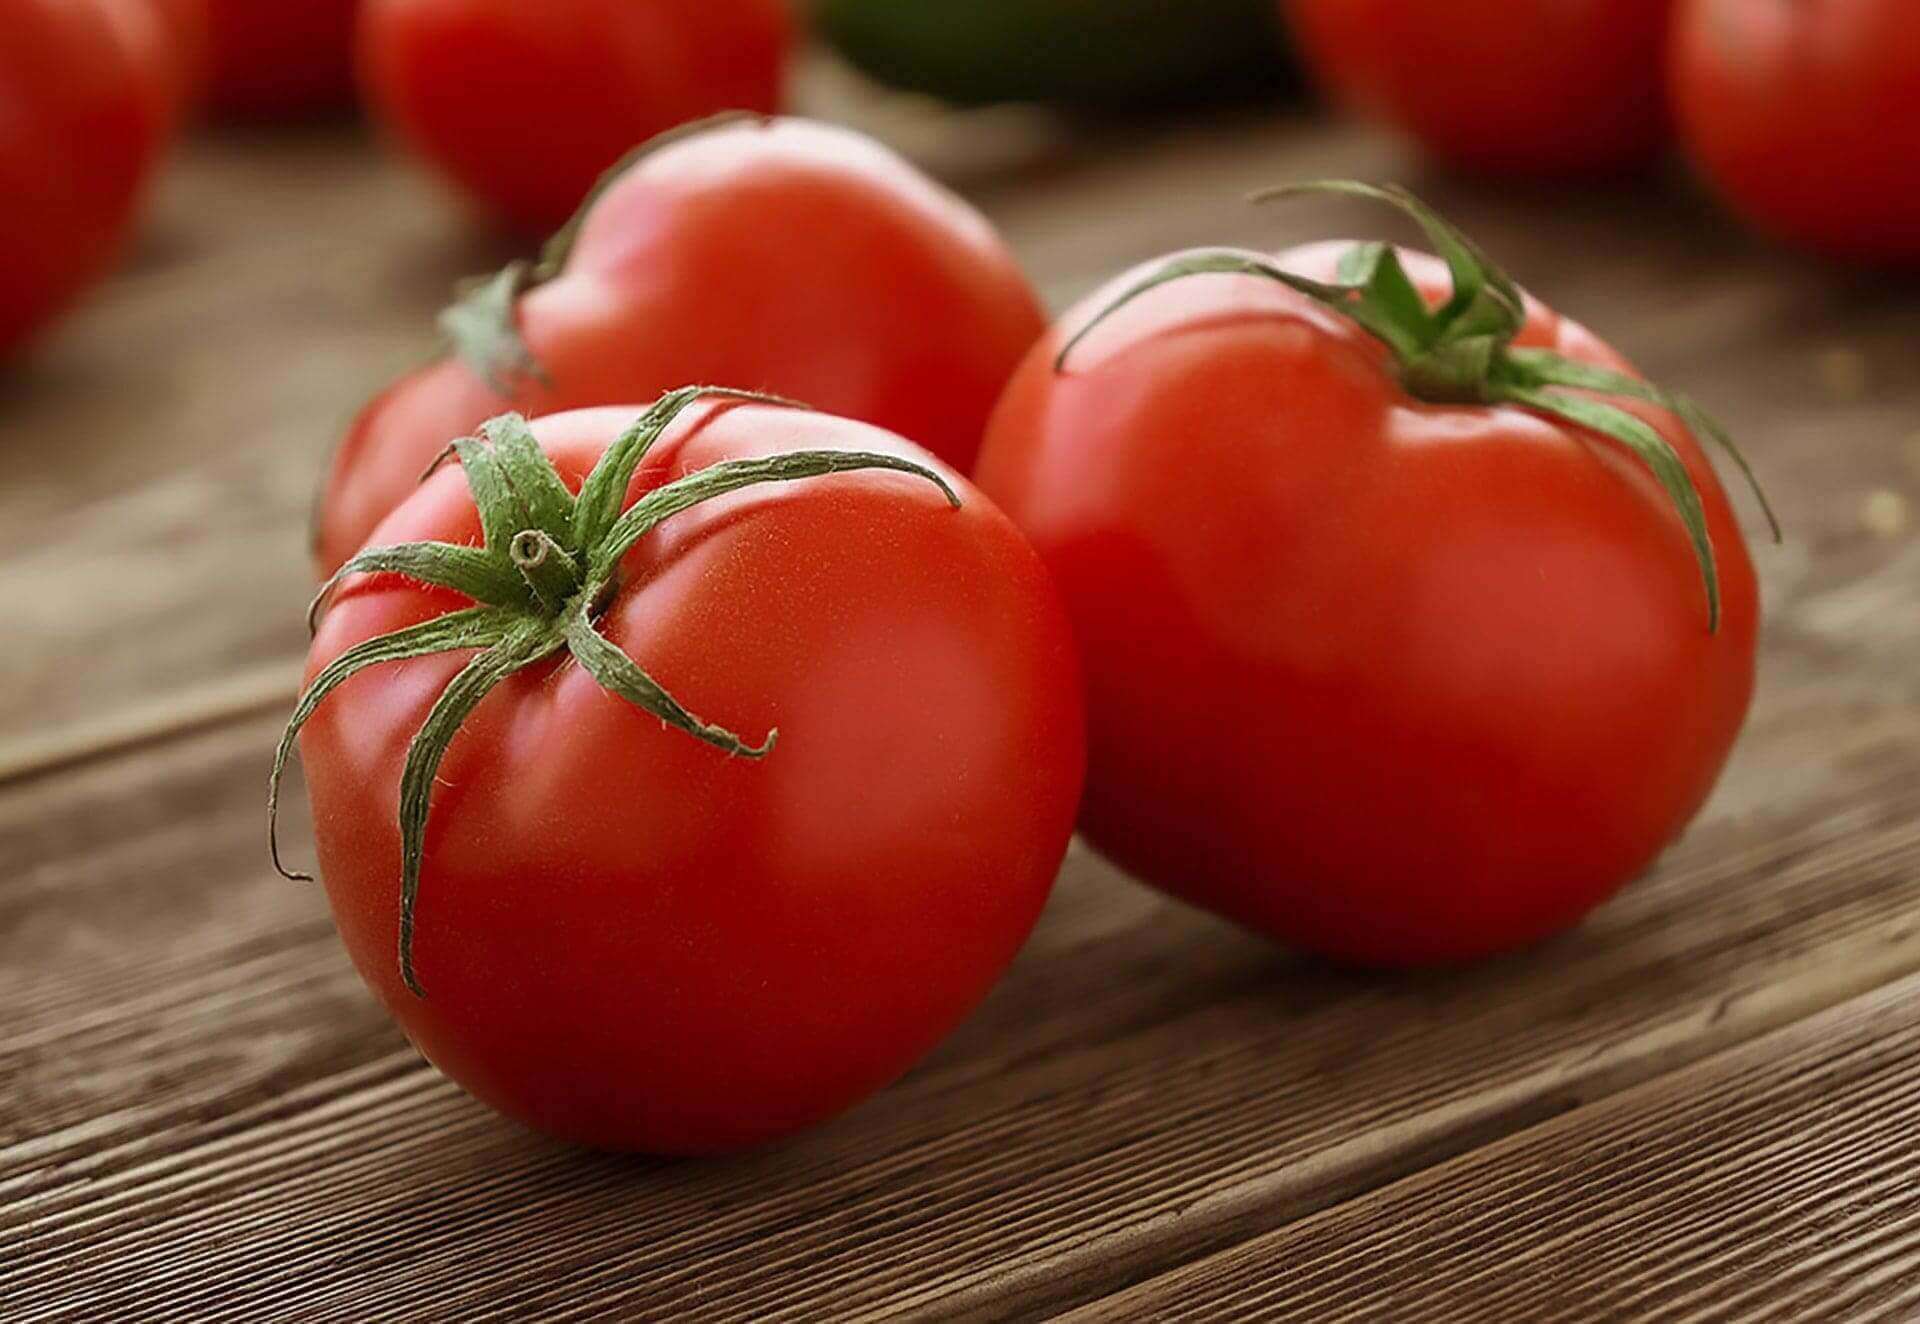 Tomato History